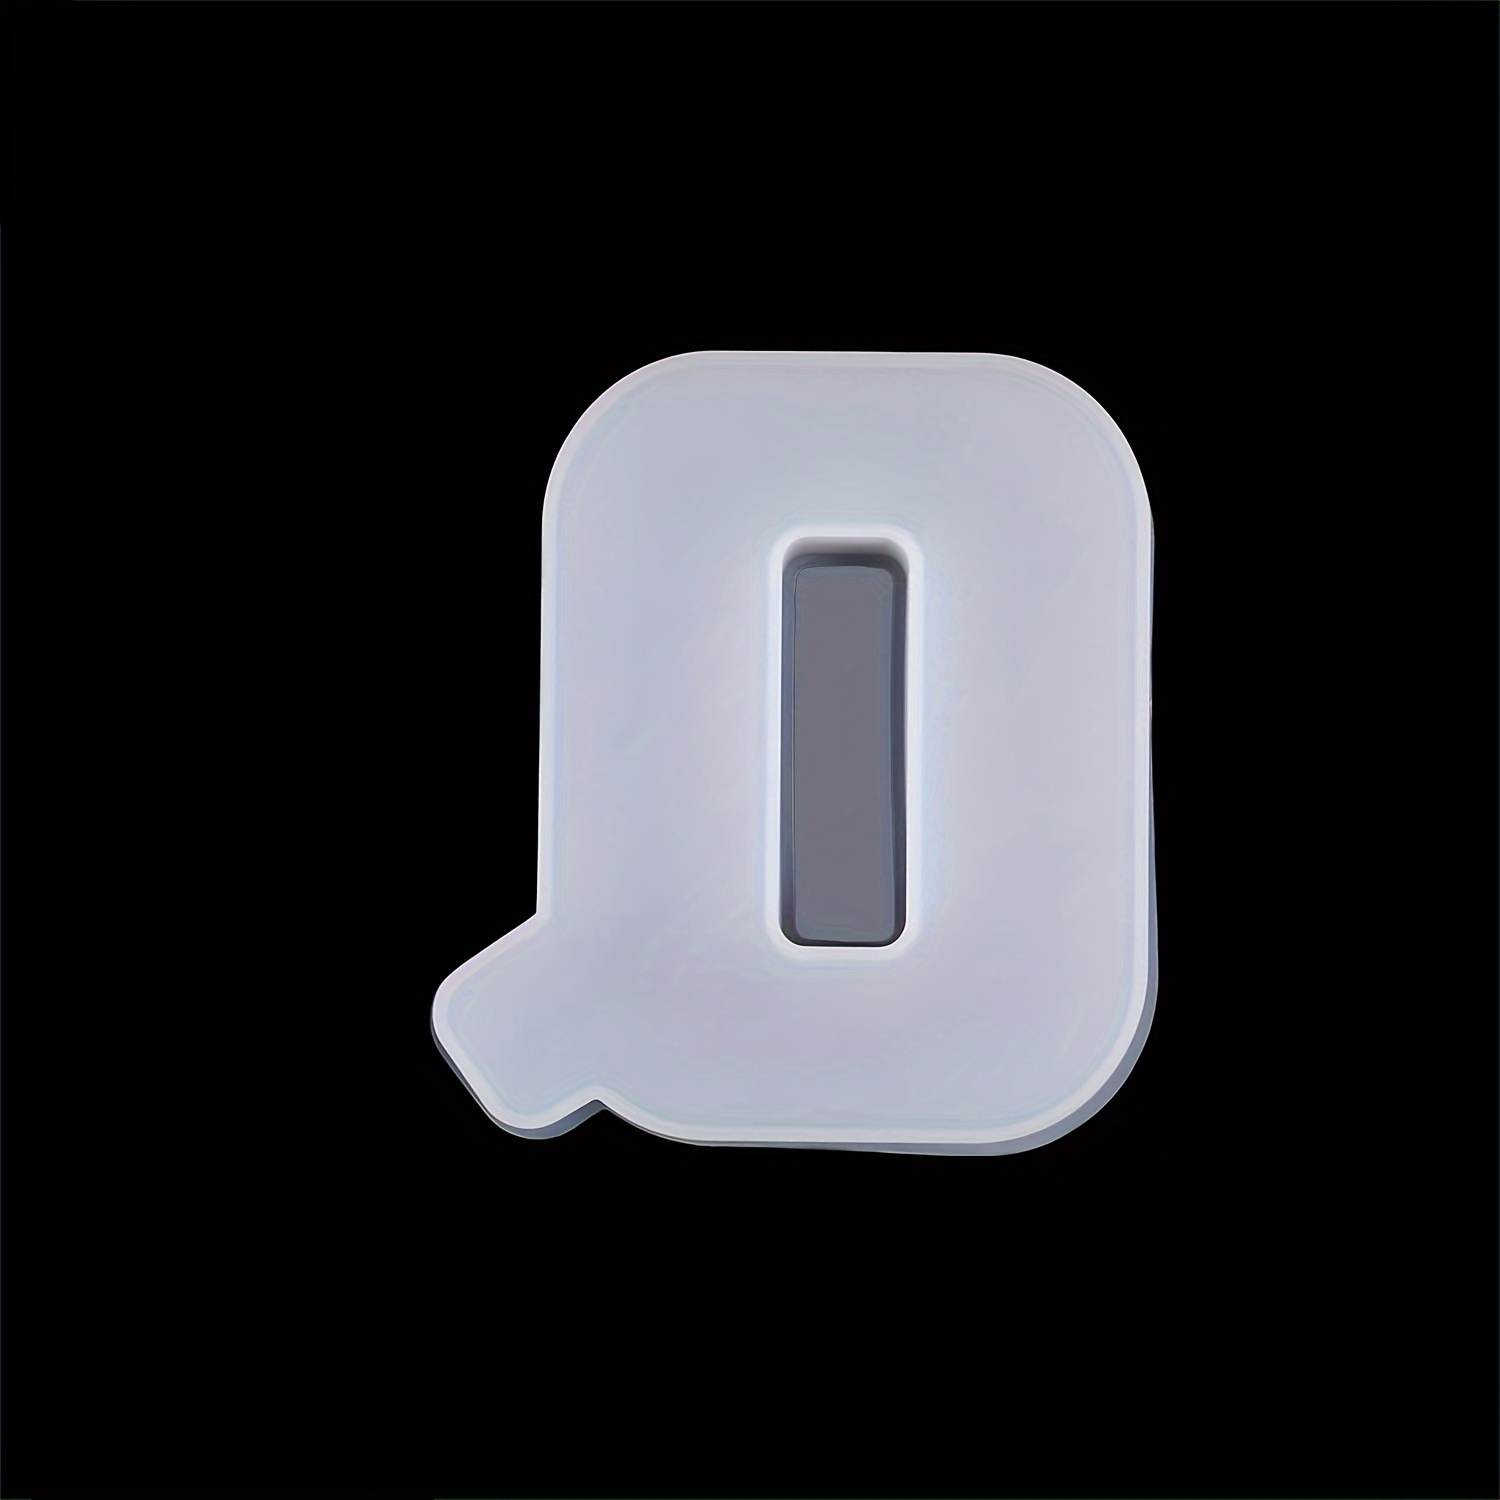 Oxodoi Large Letter Resin Molds, Silicone Mold 3D Alphabet Letter for DIY  Art Craft, Home Decoration 